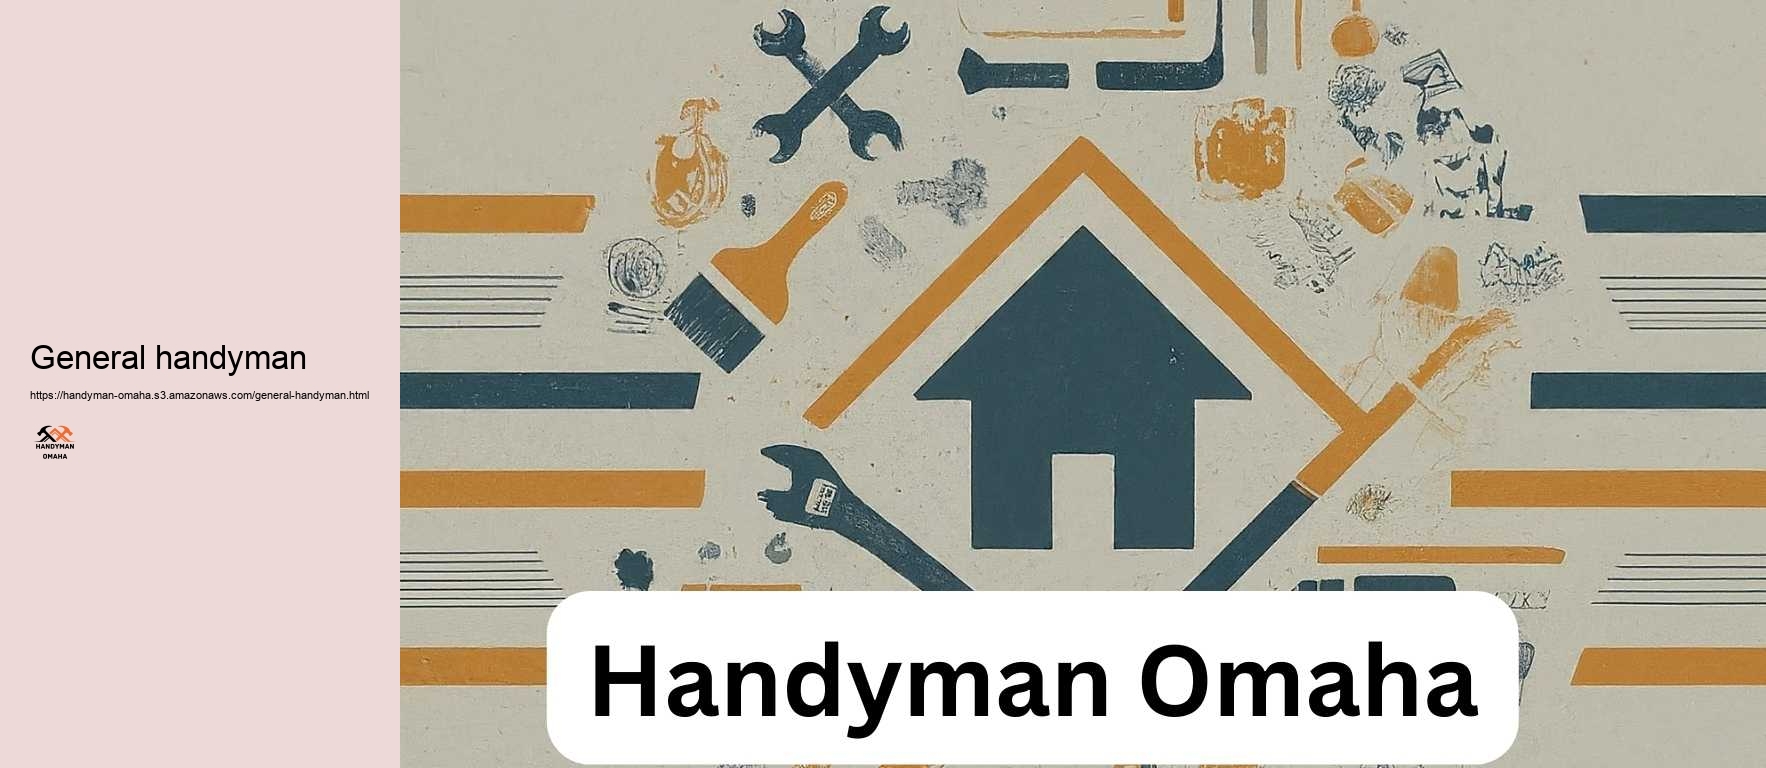 General handyman